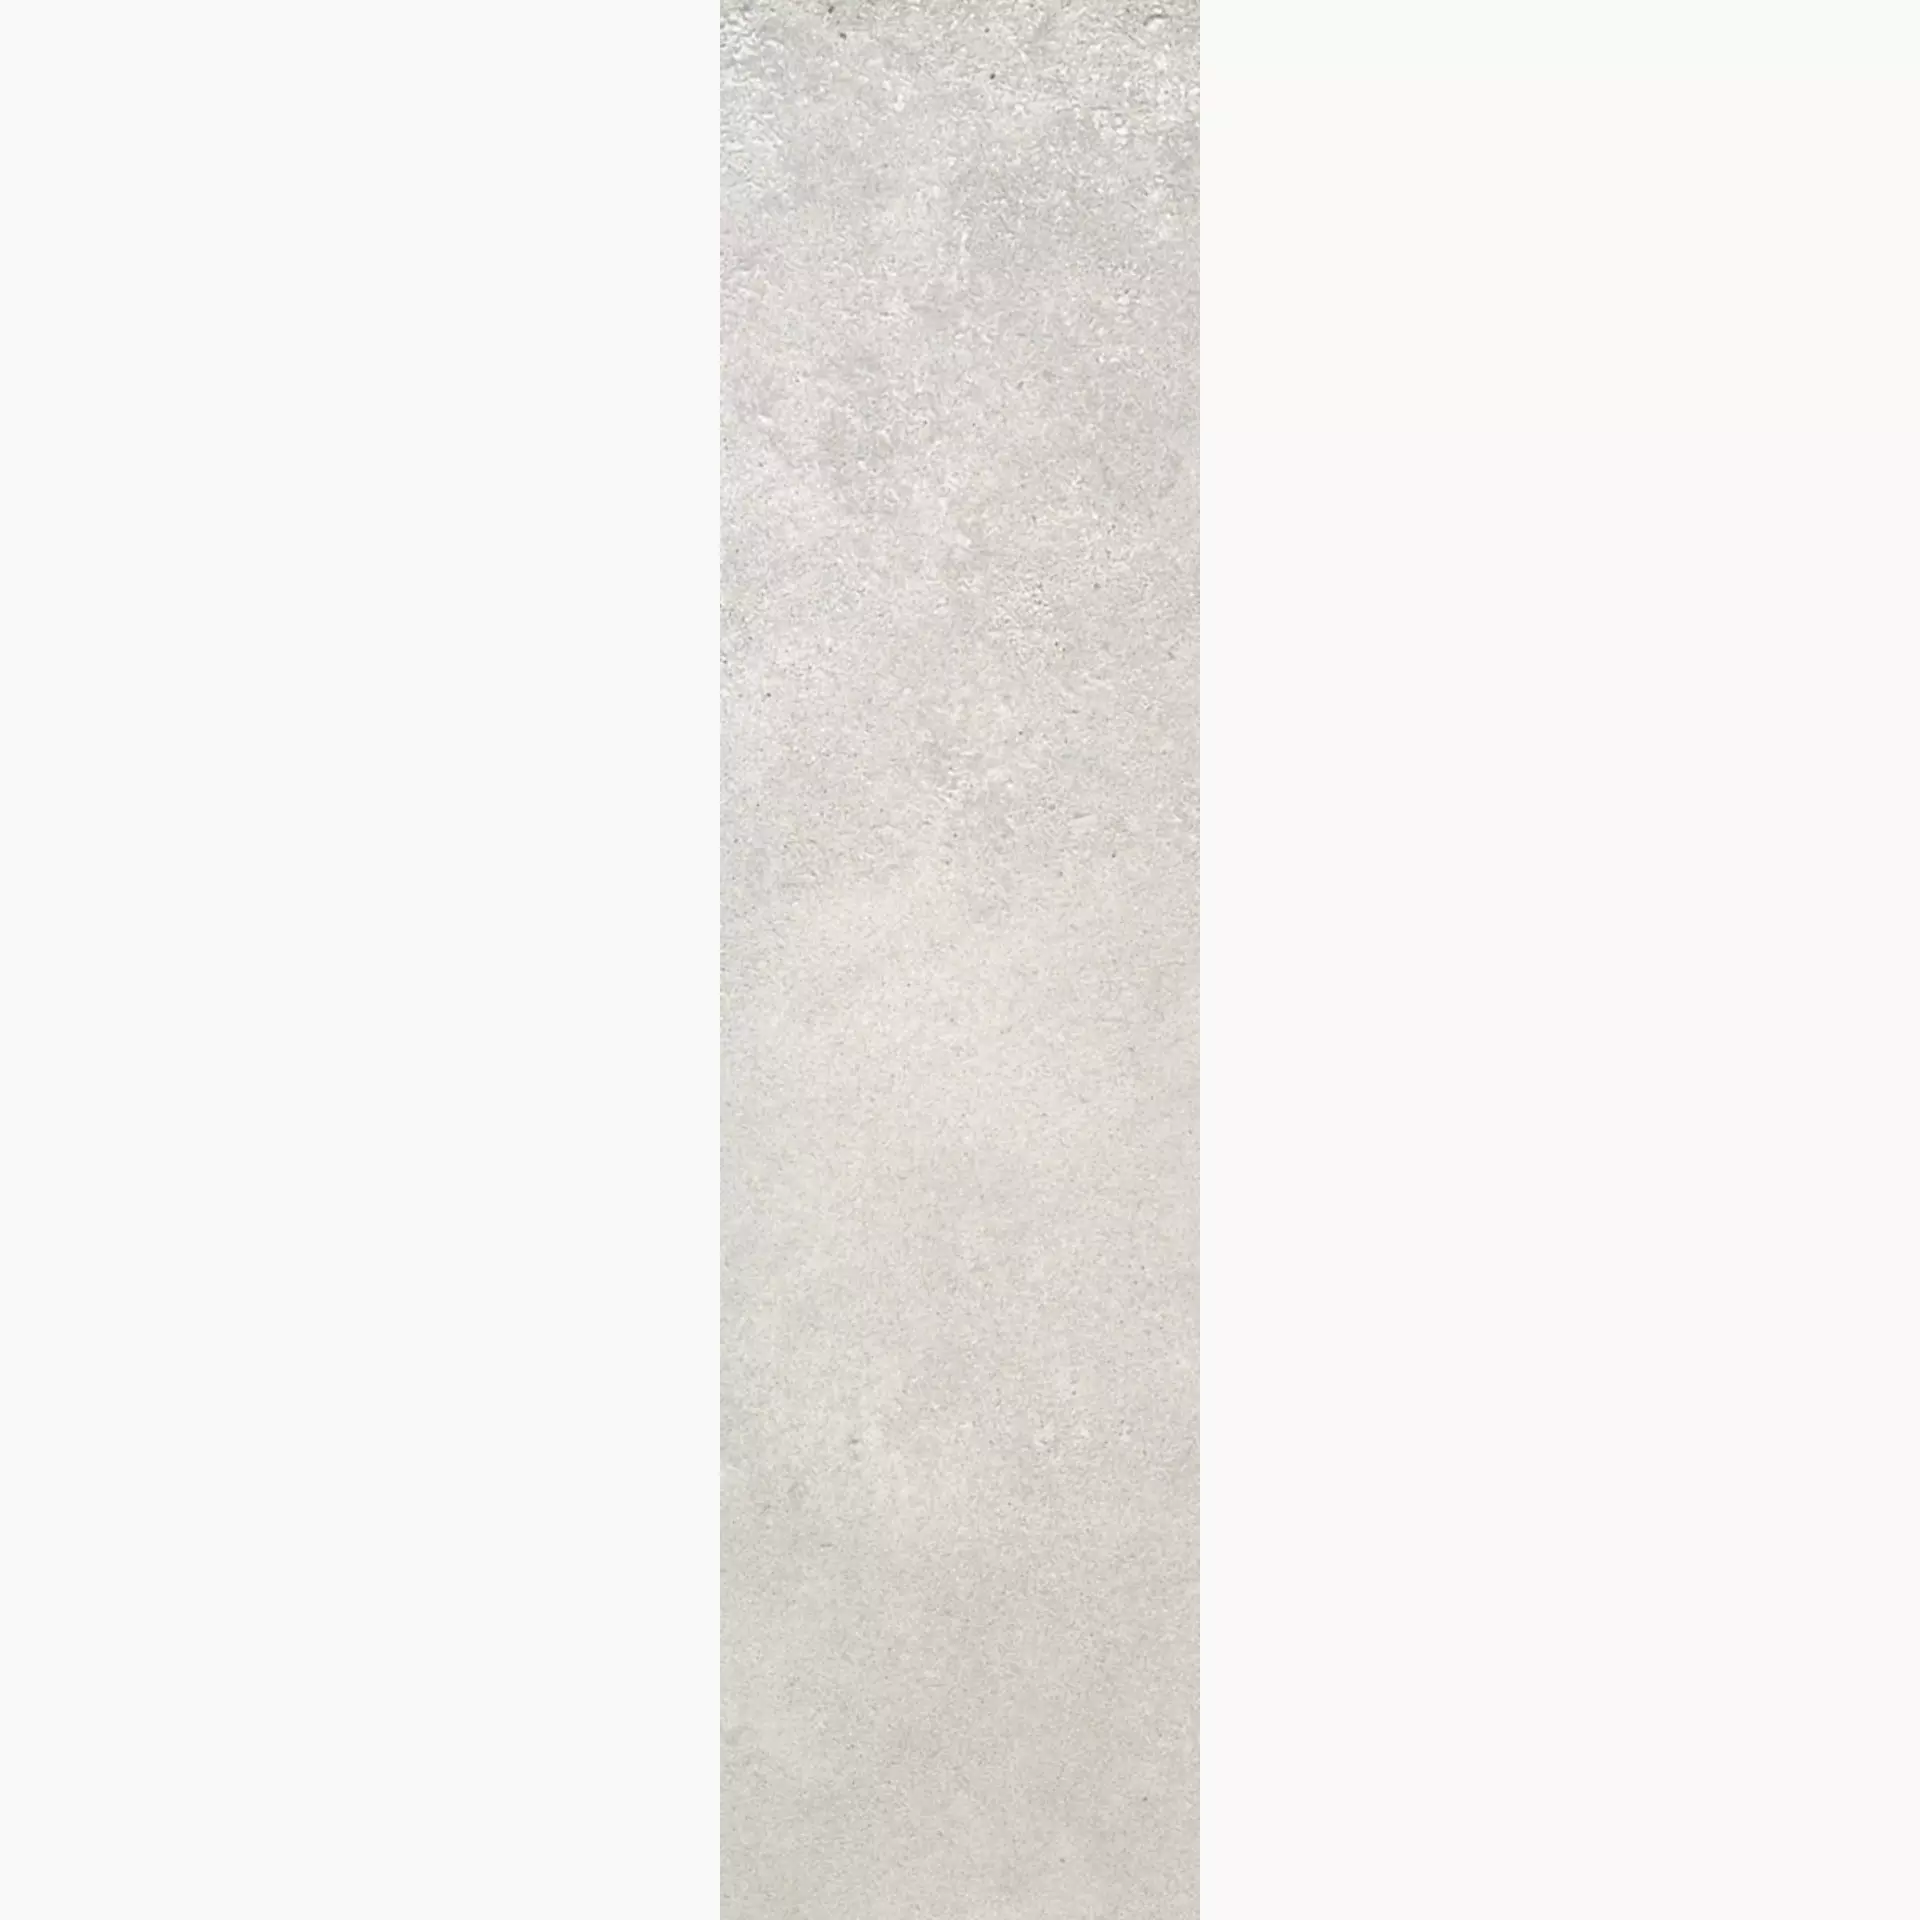 Rondine Loft White Naturale J89212 20x80cm rectified 8,5mm